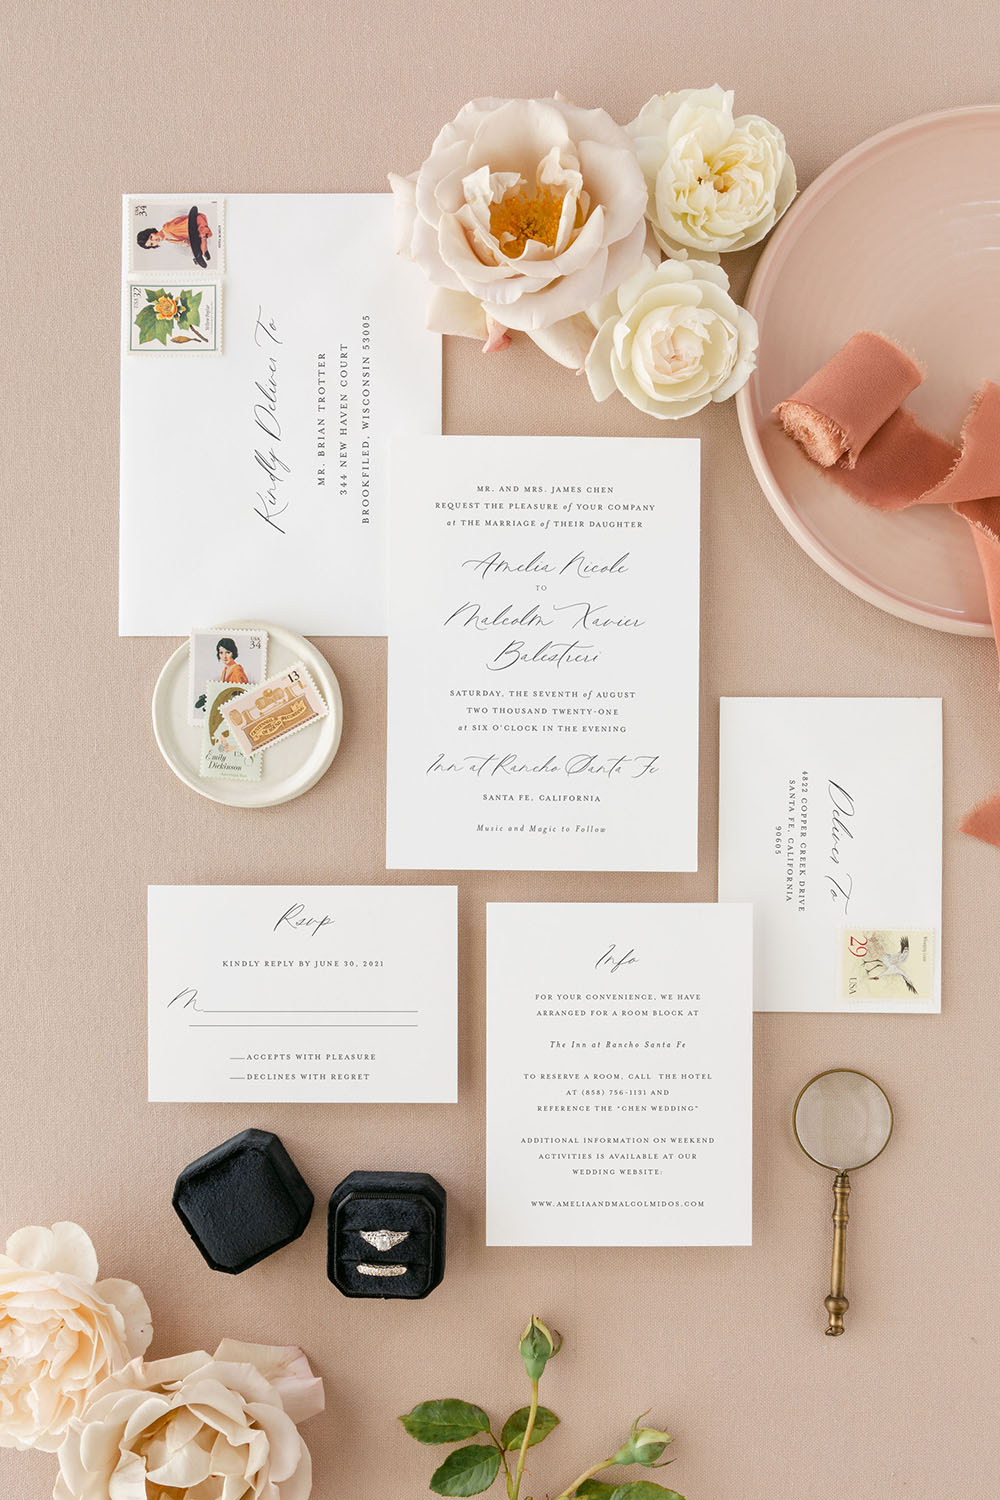 How to address wedding invitations